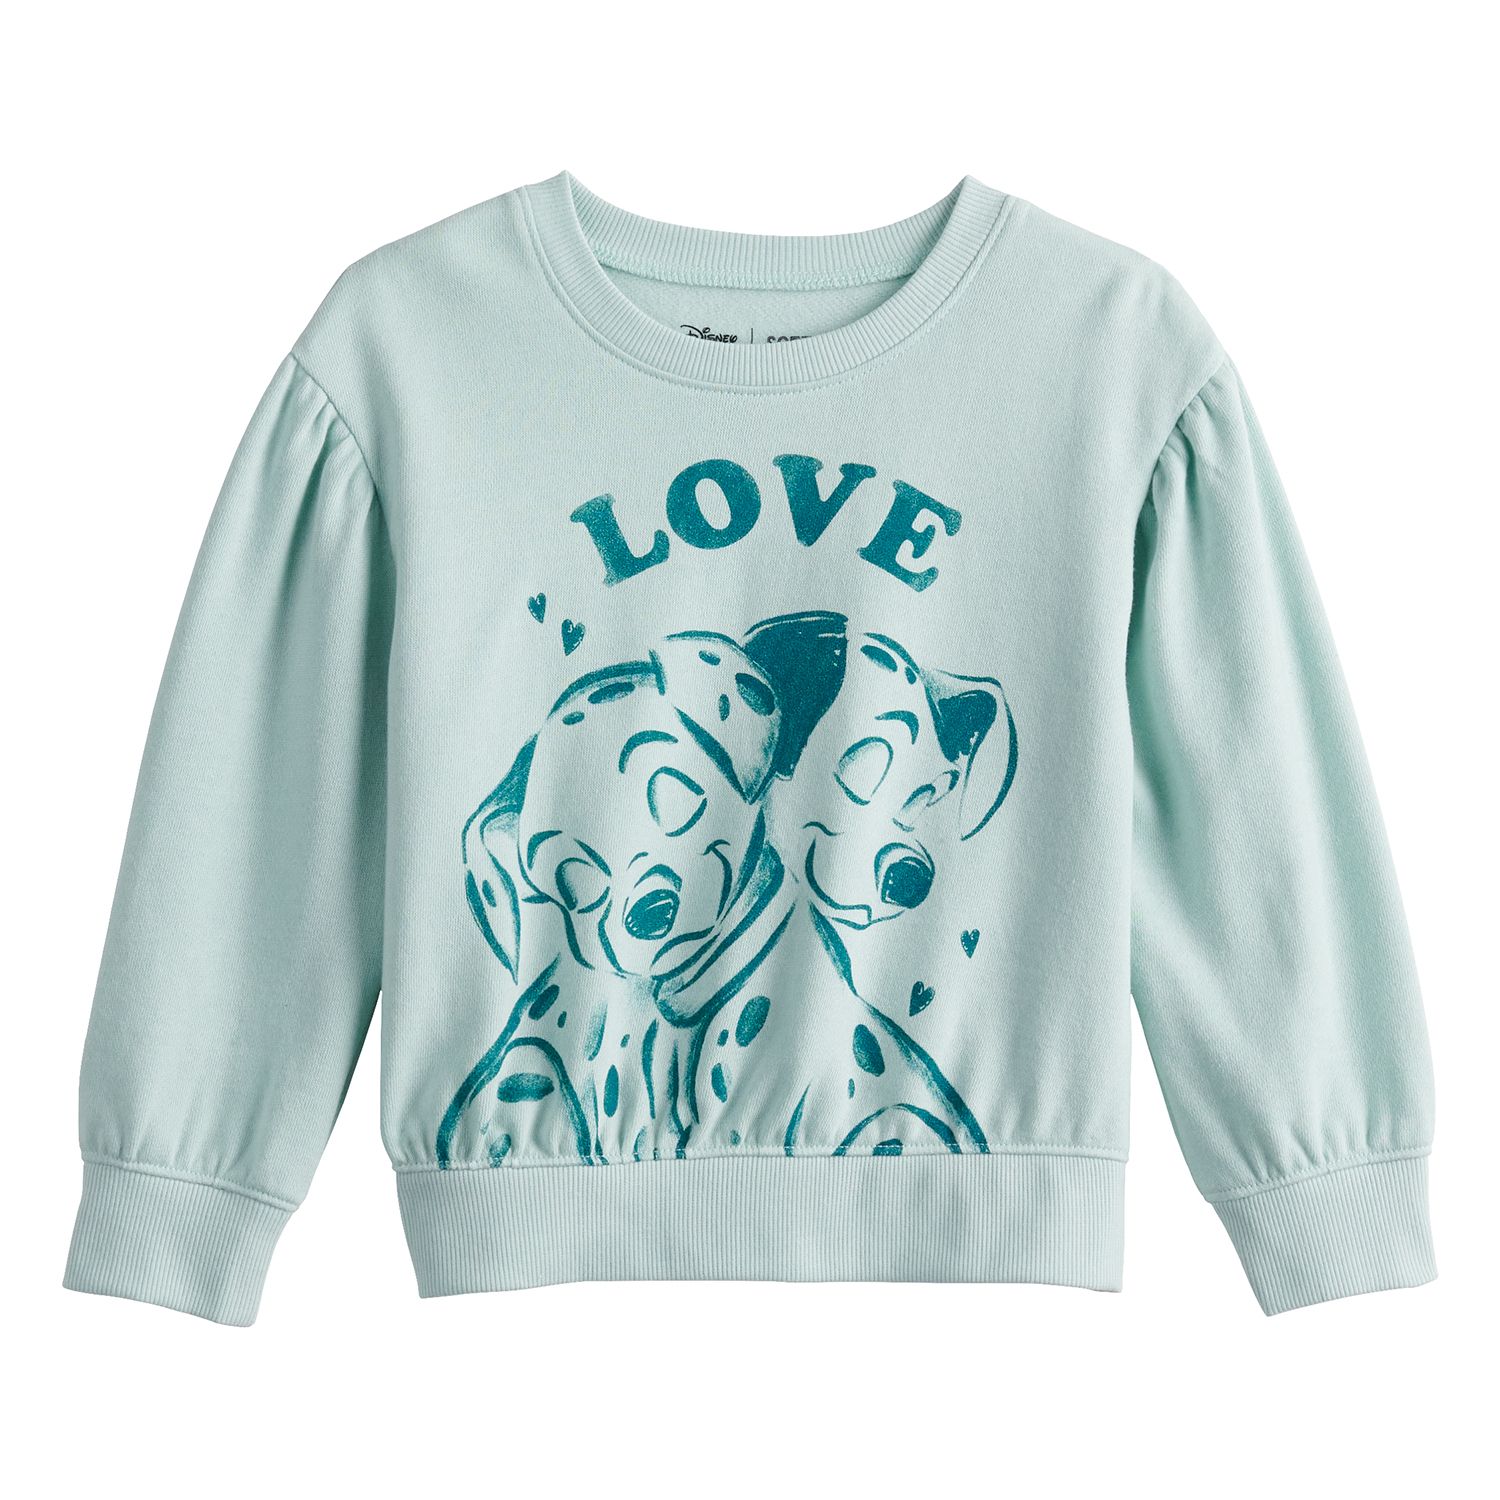 Image for Disney/Jumping Beans Disney's 101 Dalmatians Toddler Girl Fleece Sweatshirt by Jumping Beans® at Kohl's.